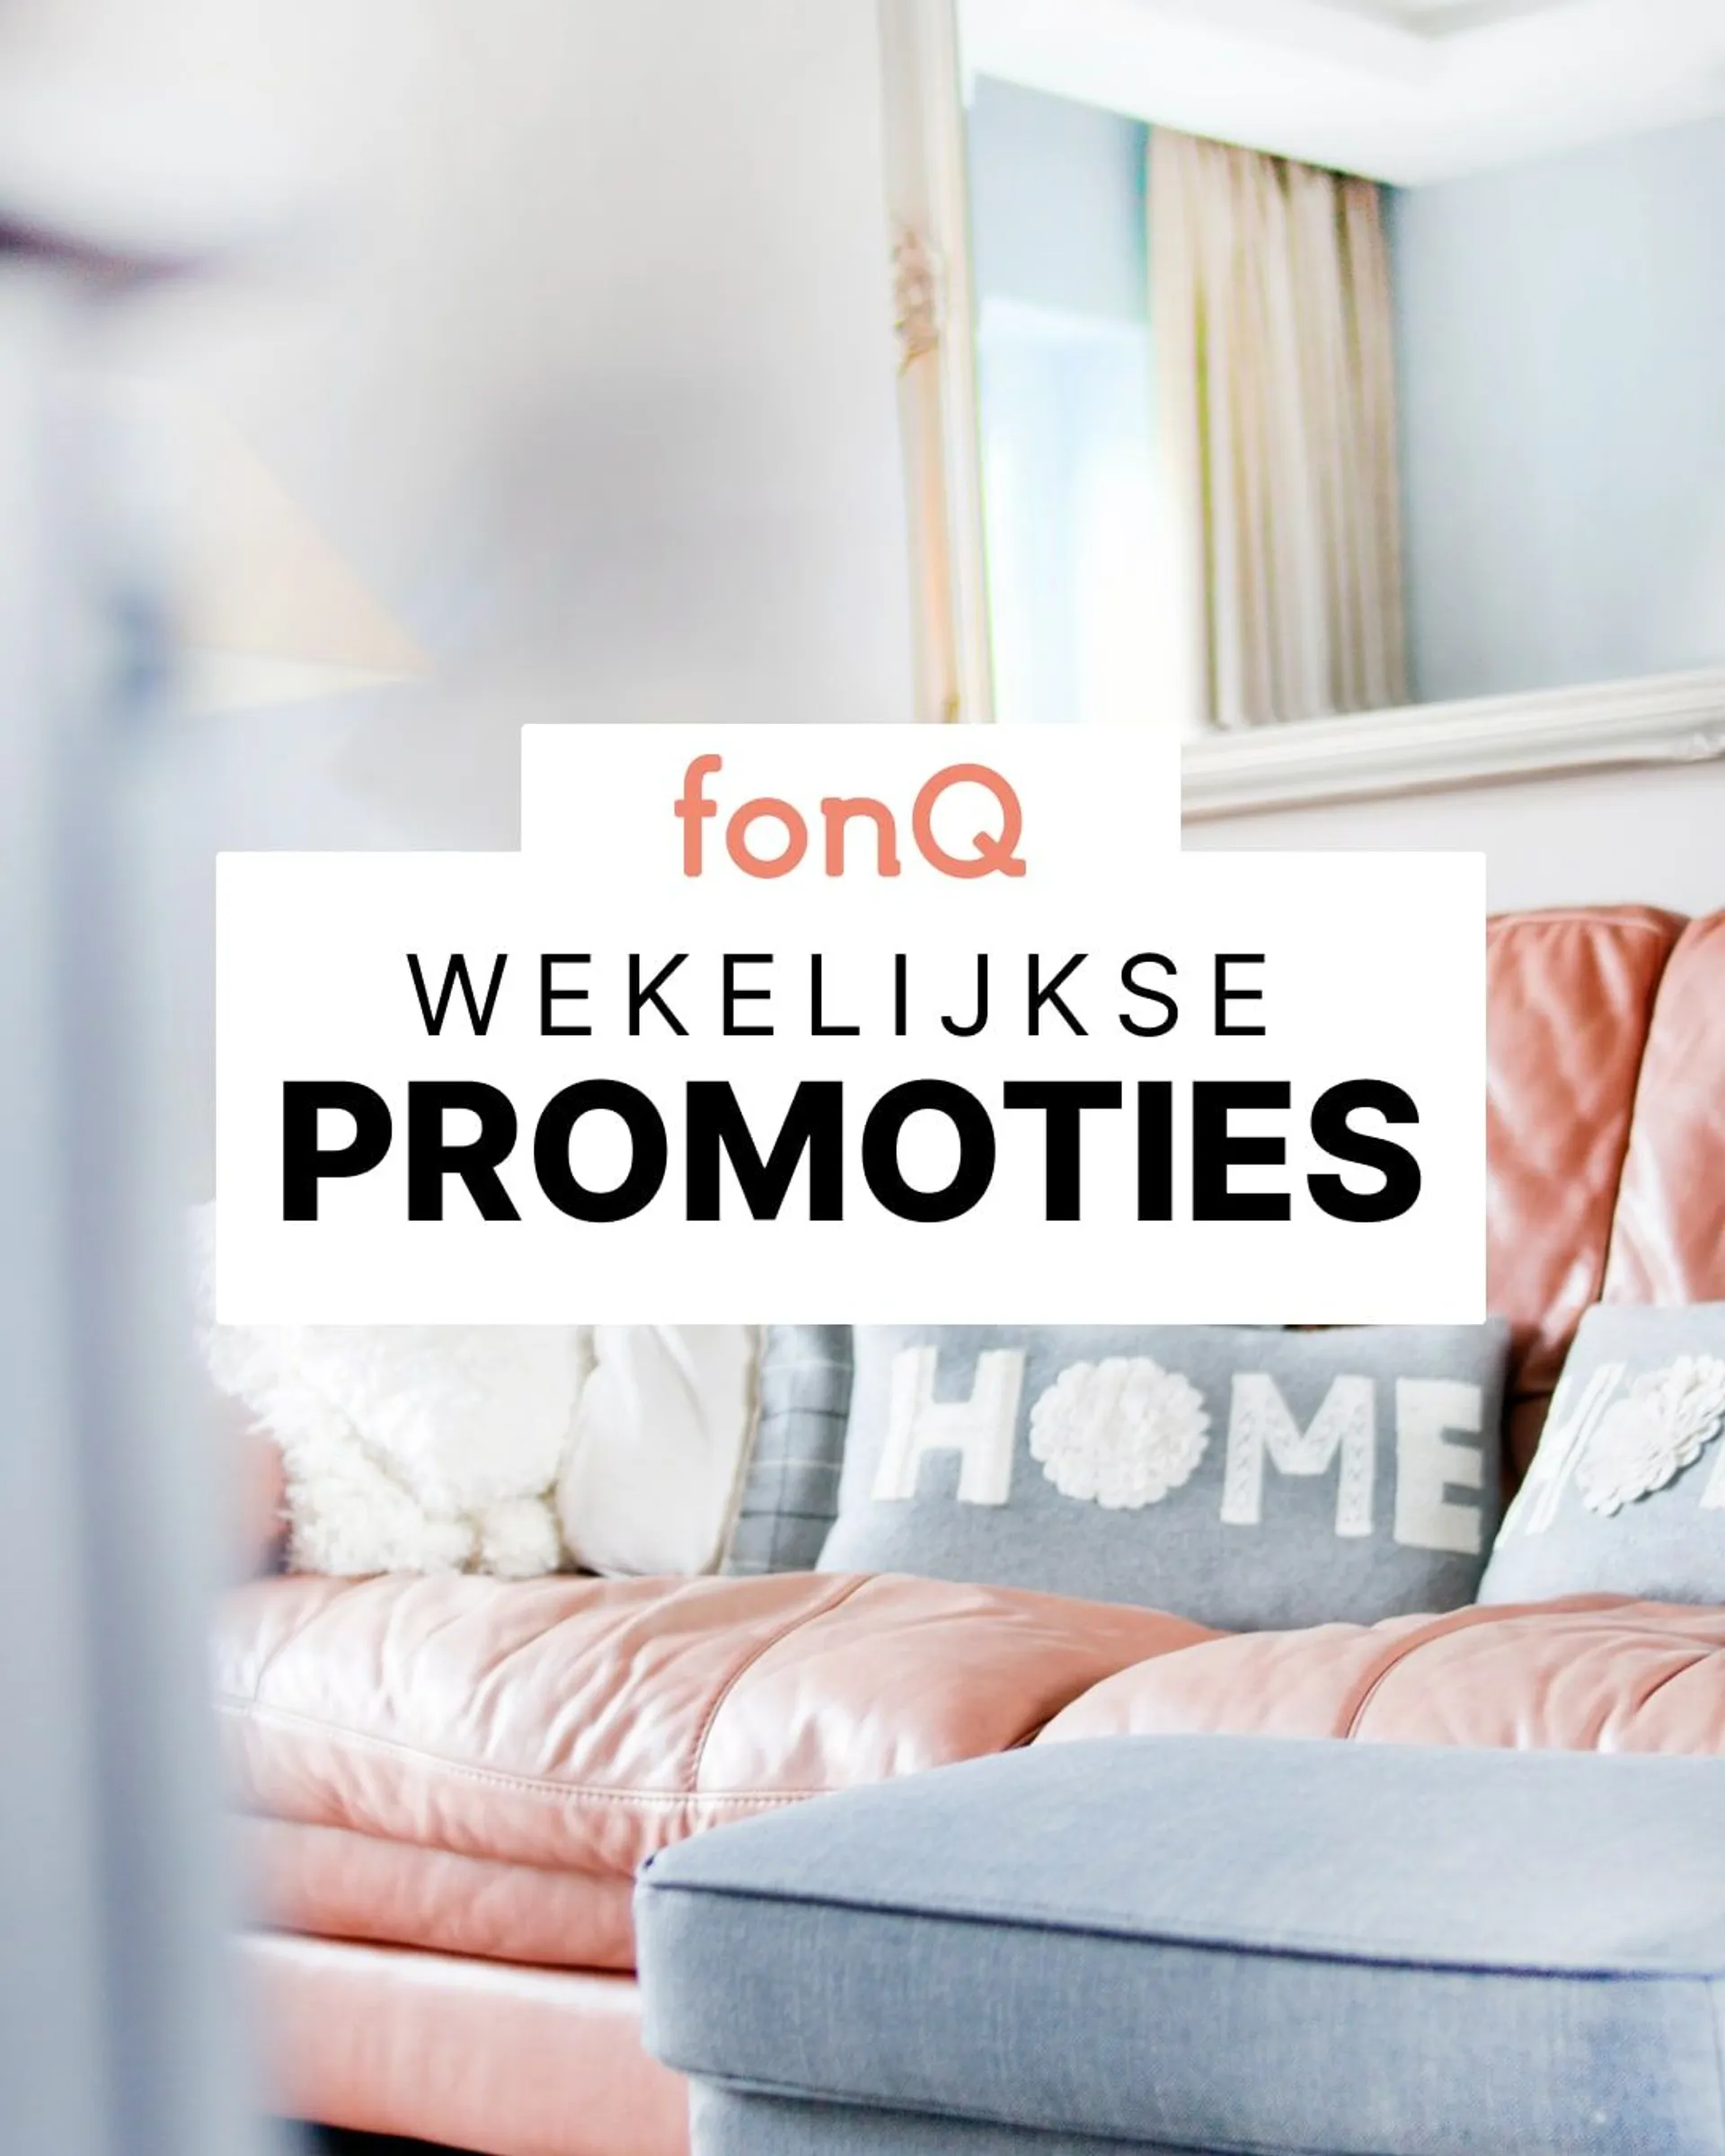 fonQ - Producten in verkoop van 14 februari tot 19 februari 2023 - Folder pagina 1